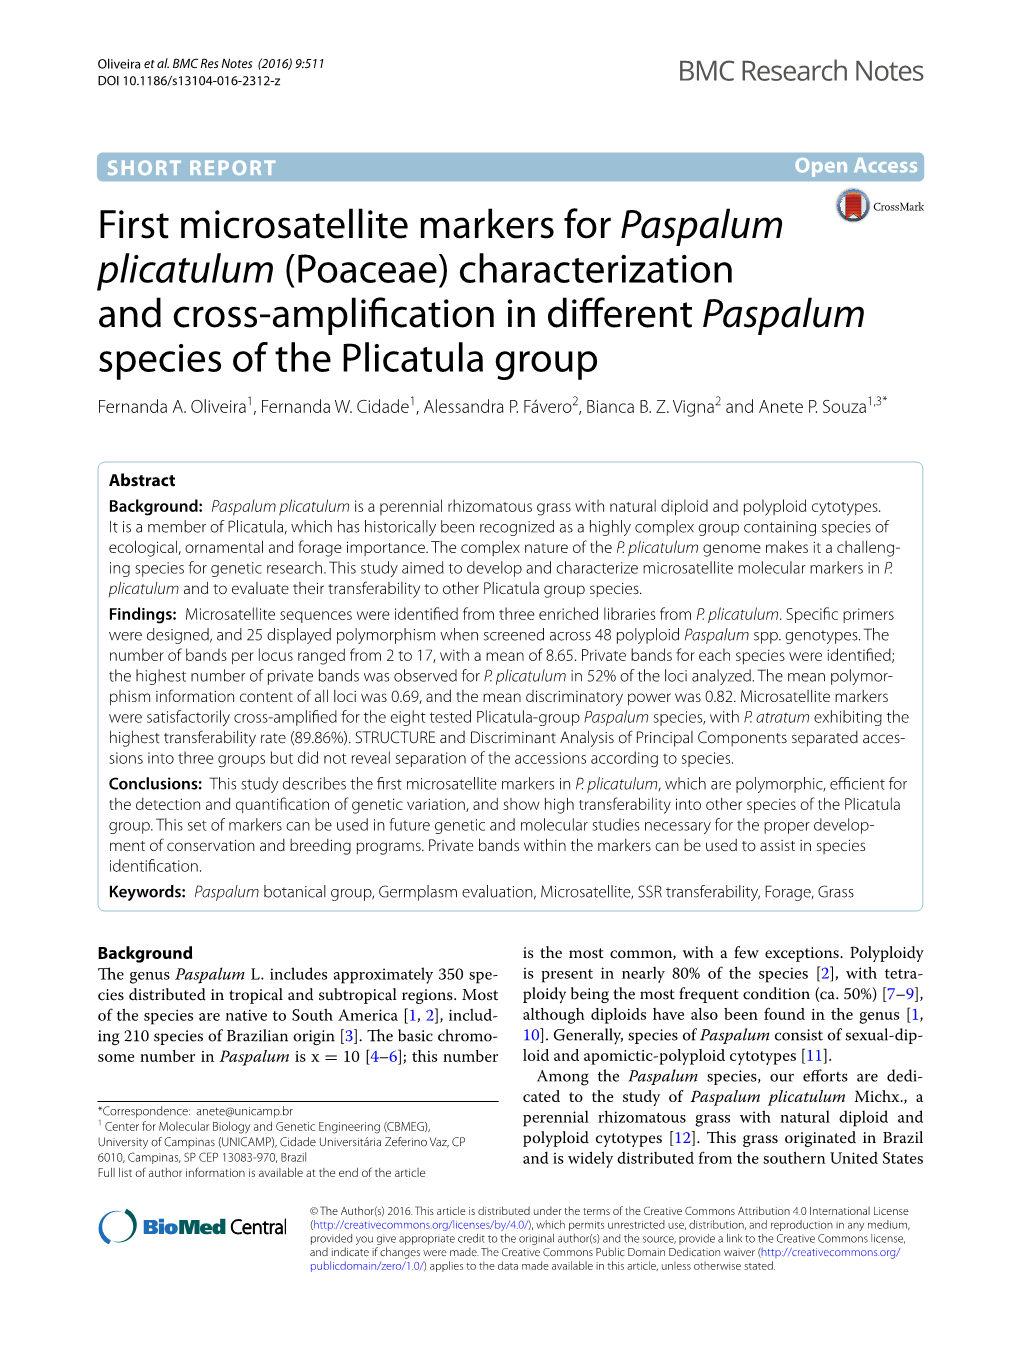 First Microsatellite Markers for Paspalum Plicatulum (Poaceae